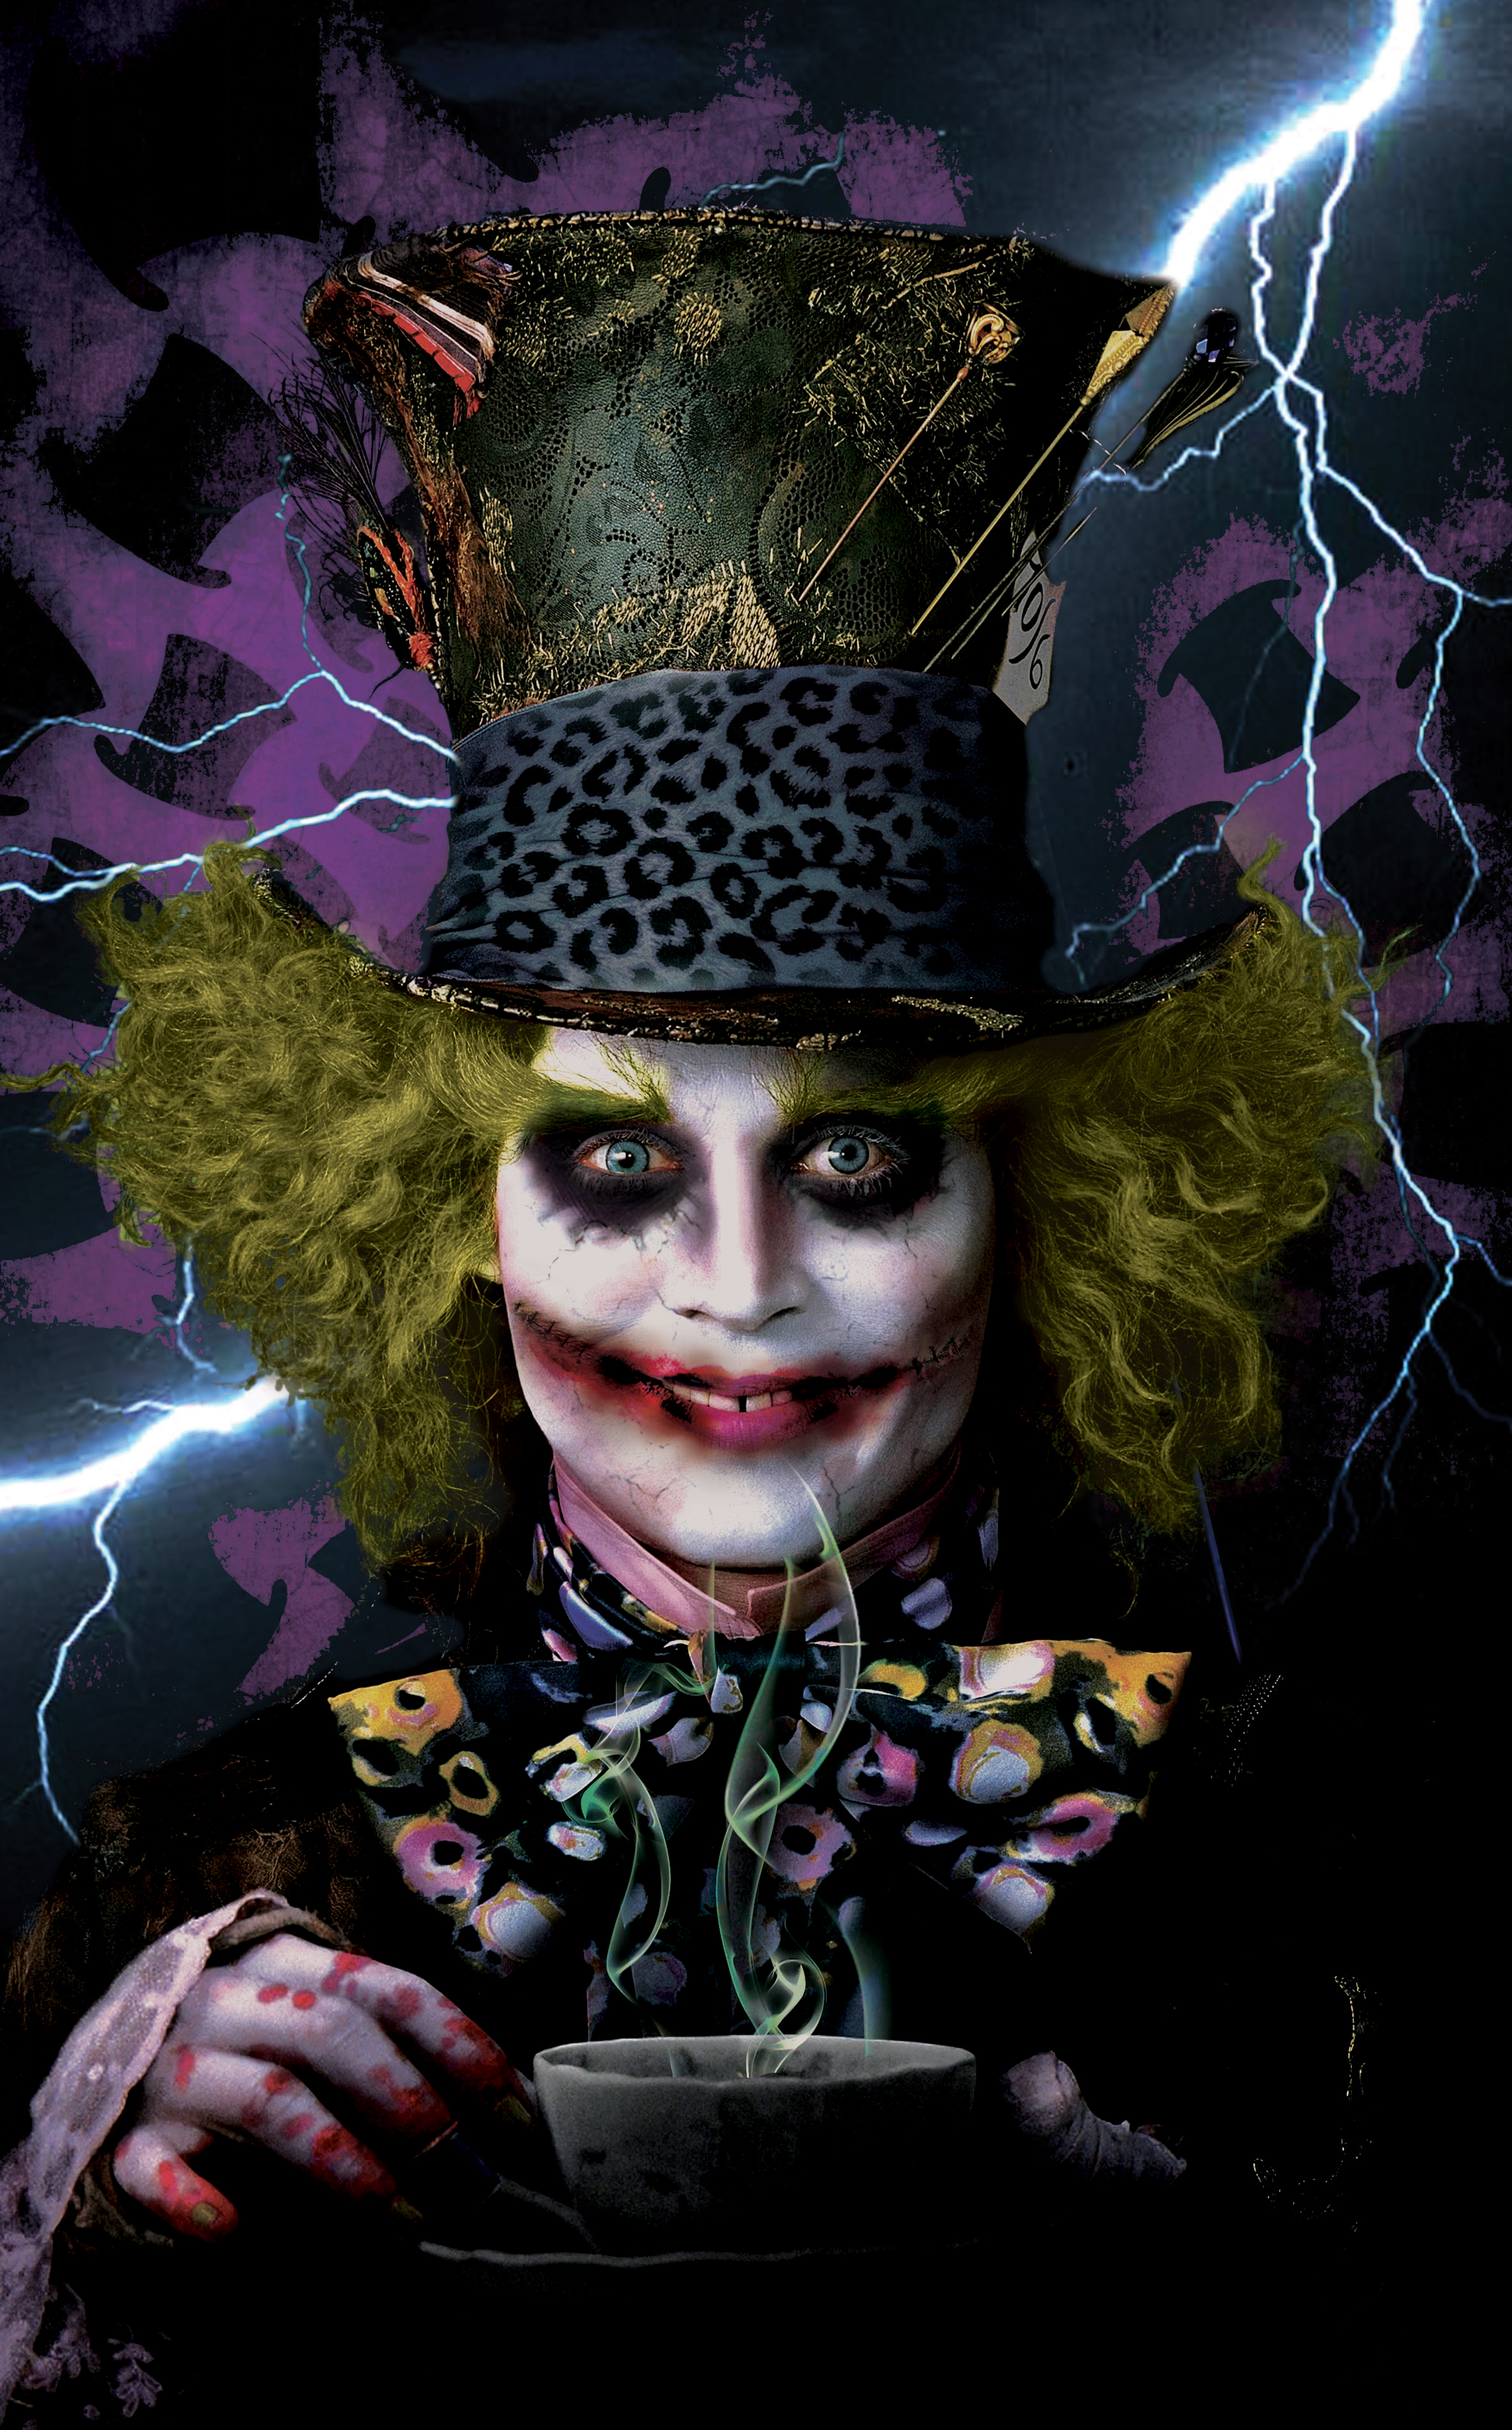 Madhatter Meets The Joker By Dzdex